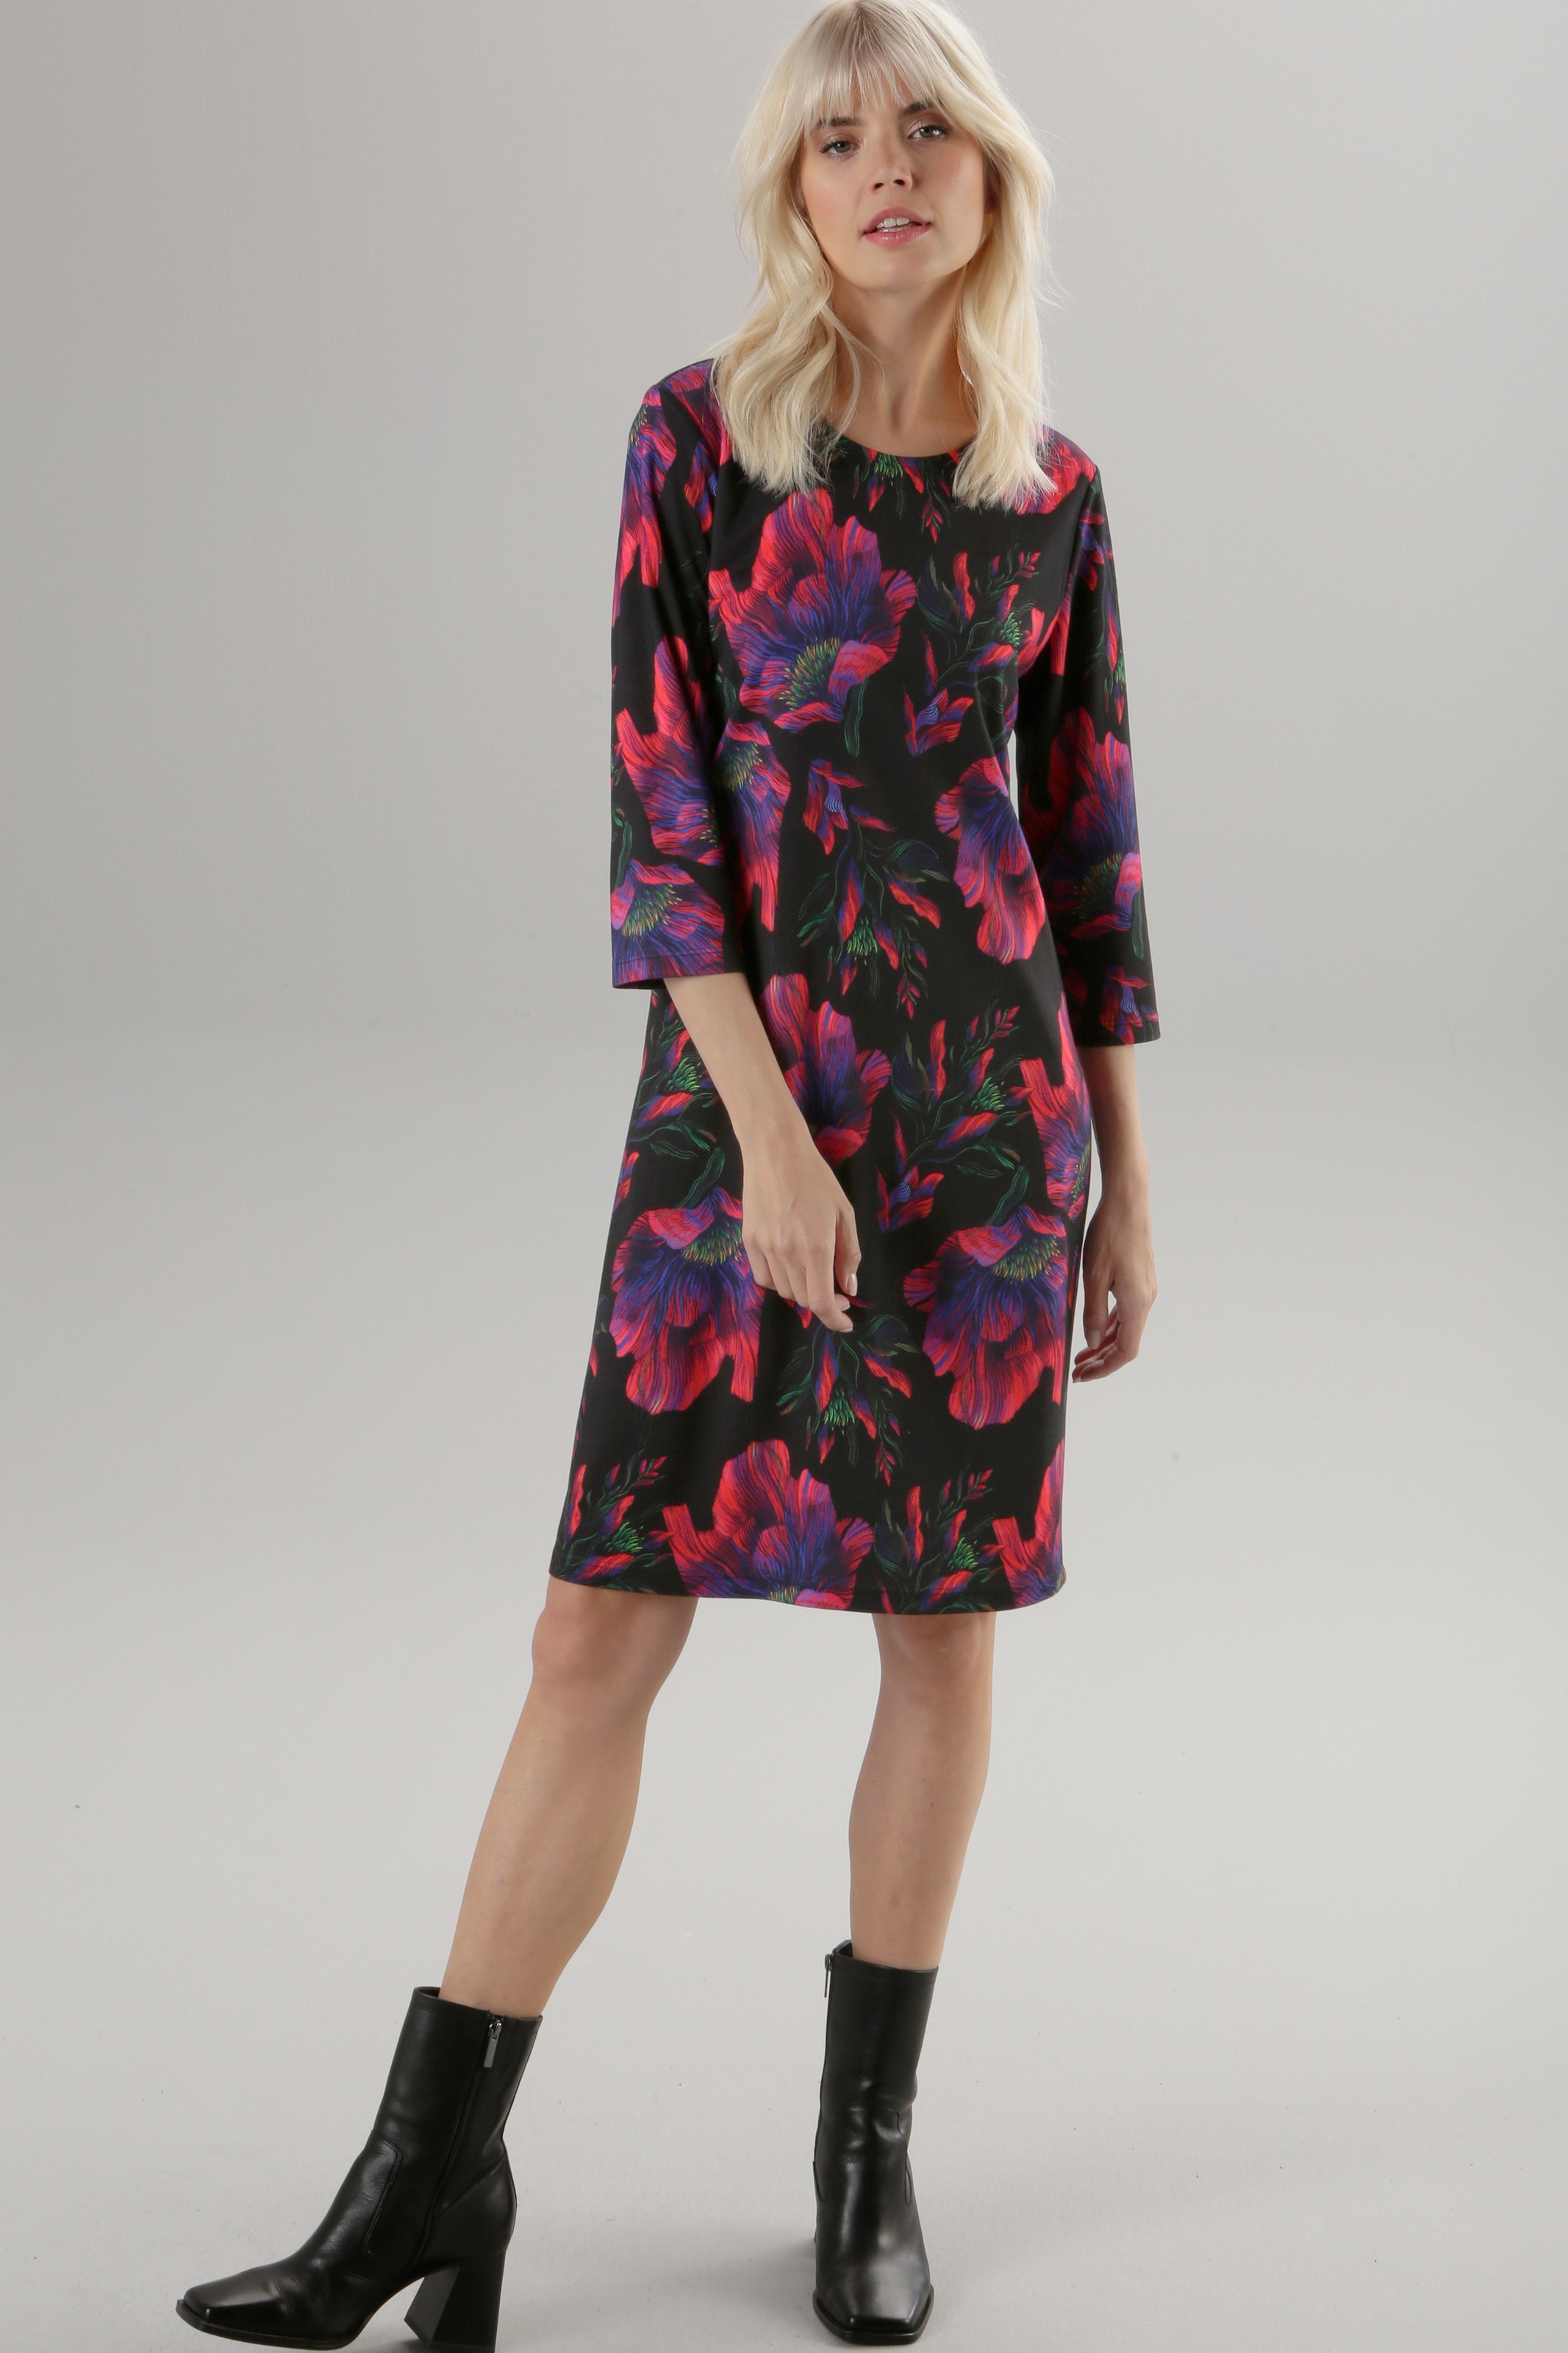 Aniston SELECTED Jerseykleid, mit Blumendruck bei in Knallfarben